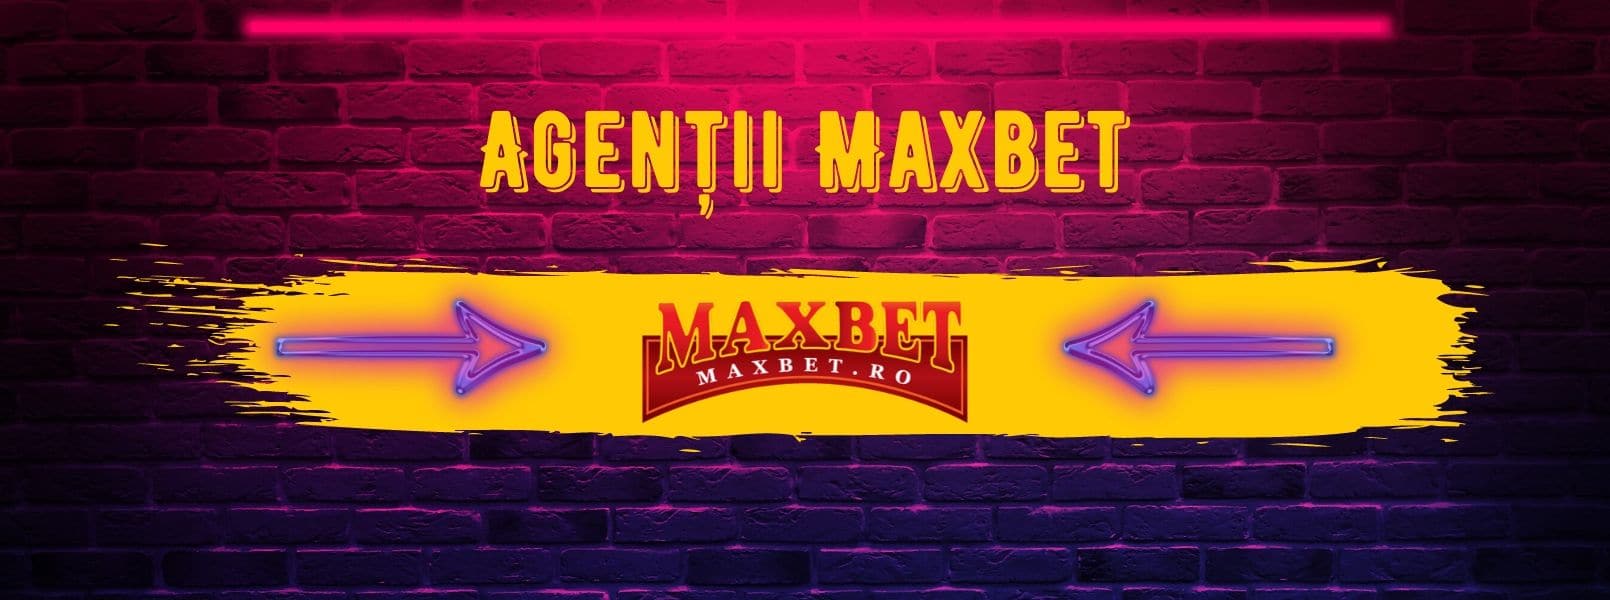 program agentii maxbet